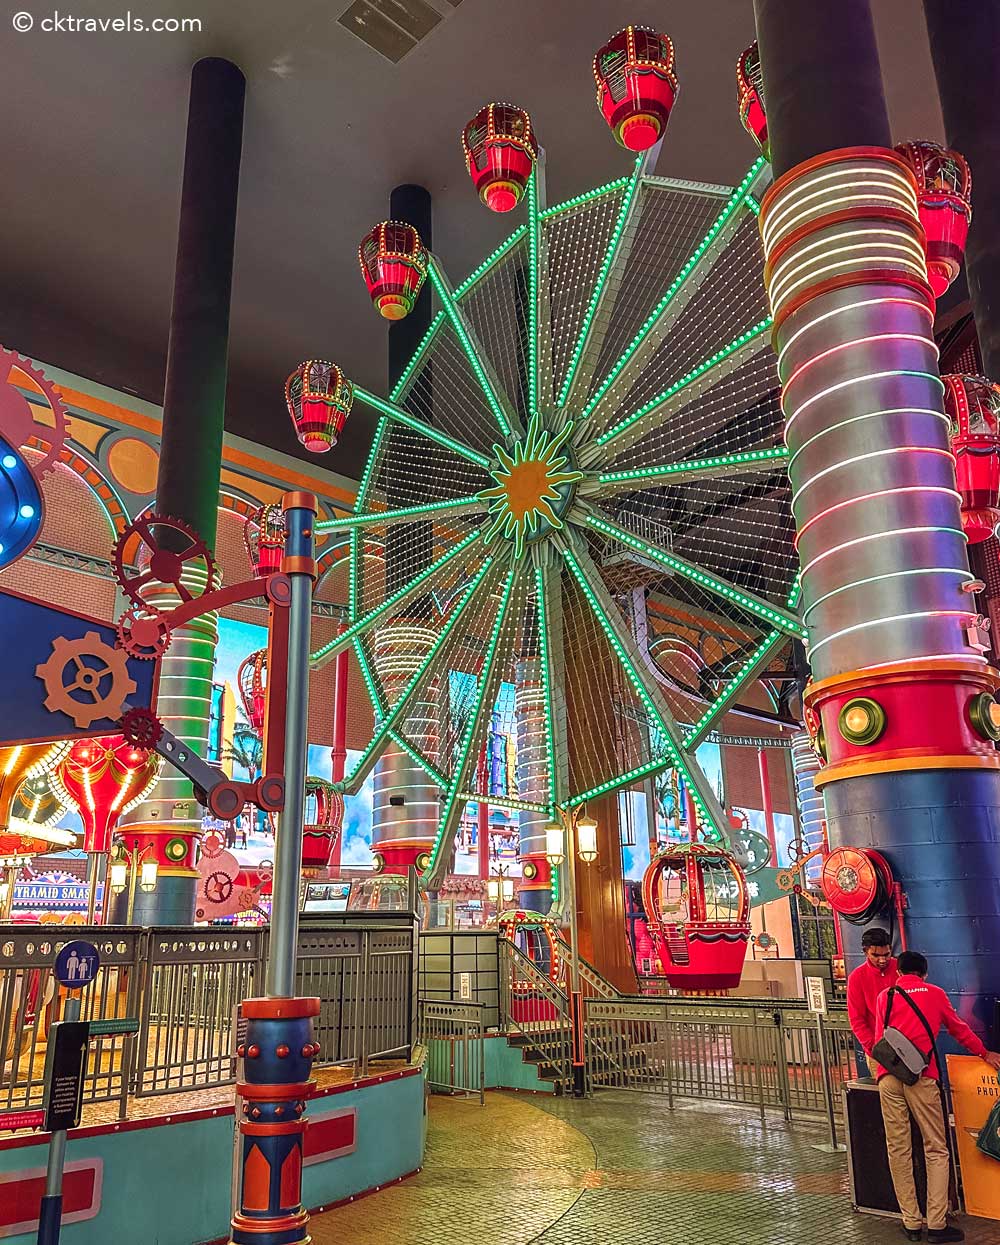 Skytroplis Indoor Theme Park Genting Highlands